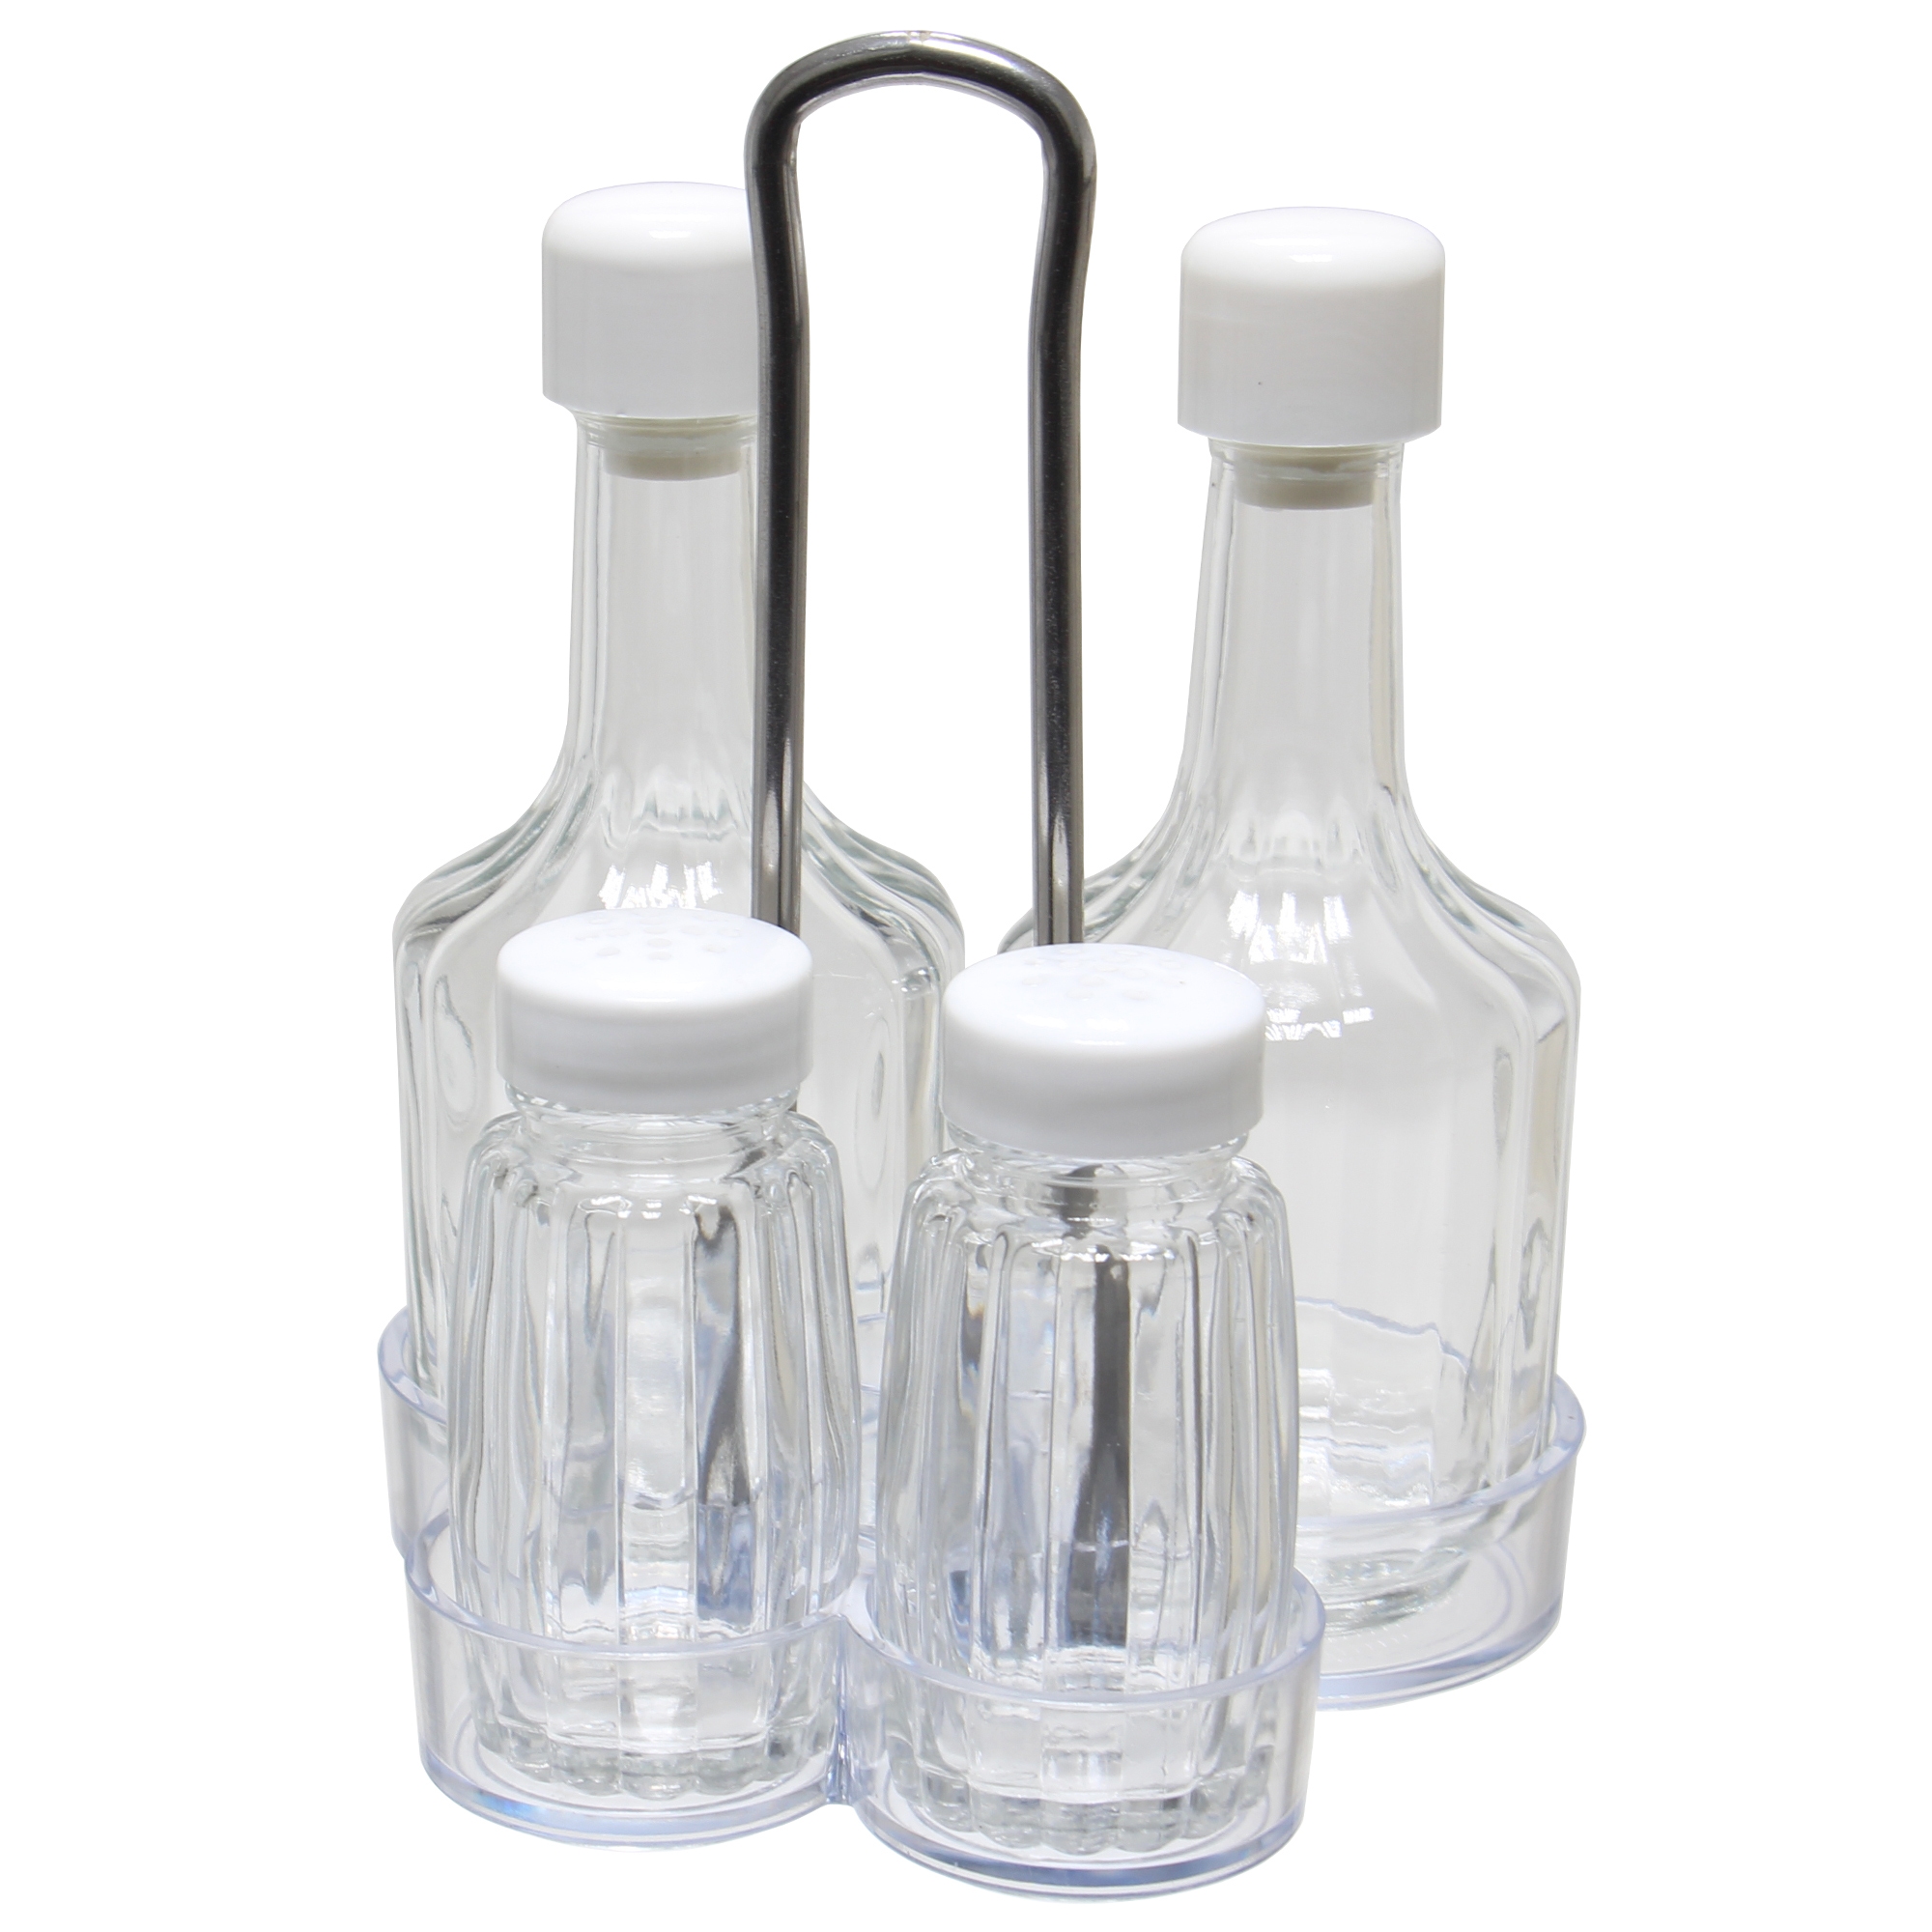 Oliviera cu 4 recipiente pentru condimente AB51, sticla + pvc, 11 x 10 x 18 cm